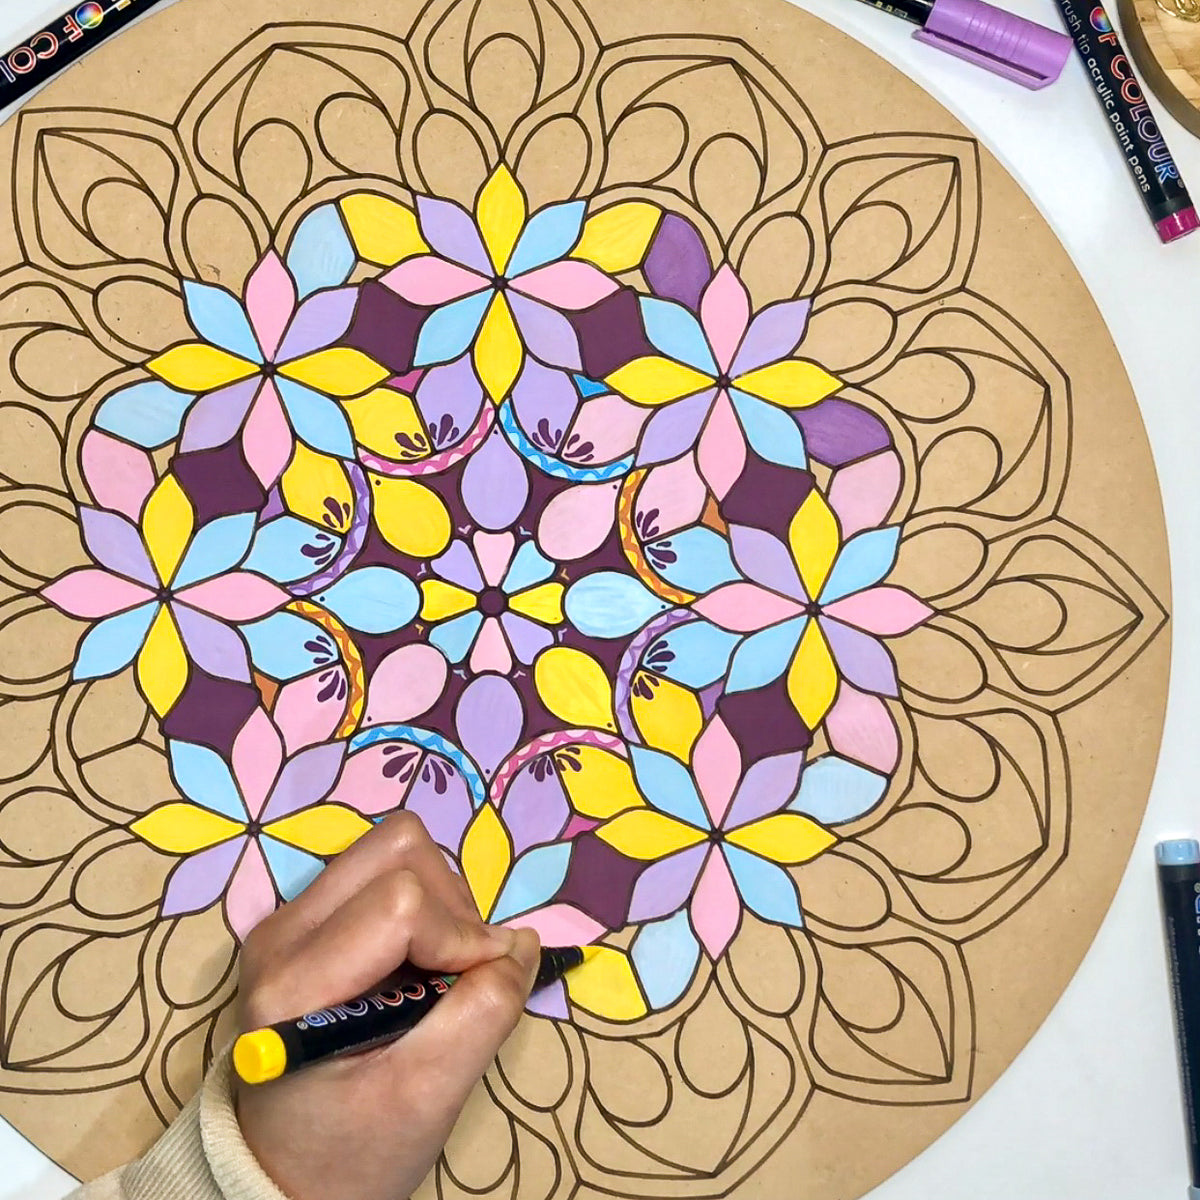 Life of Colour Mandala Painting Kit - The Kaleidoscope (Florals)